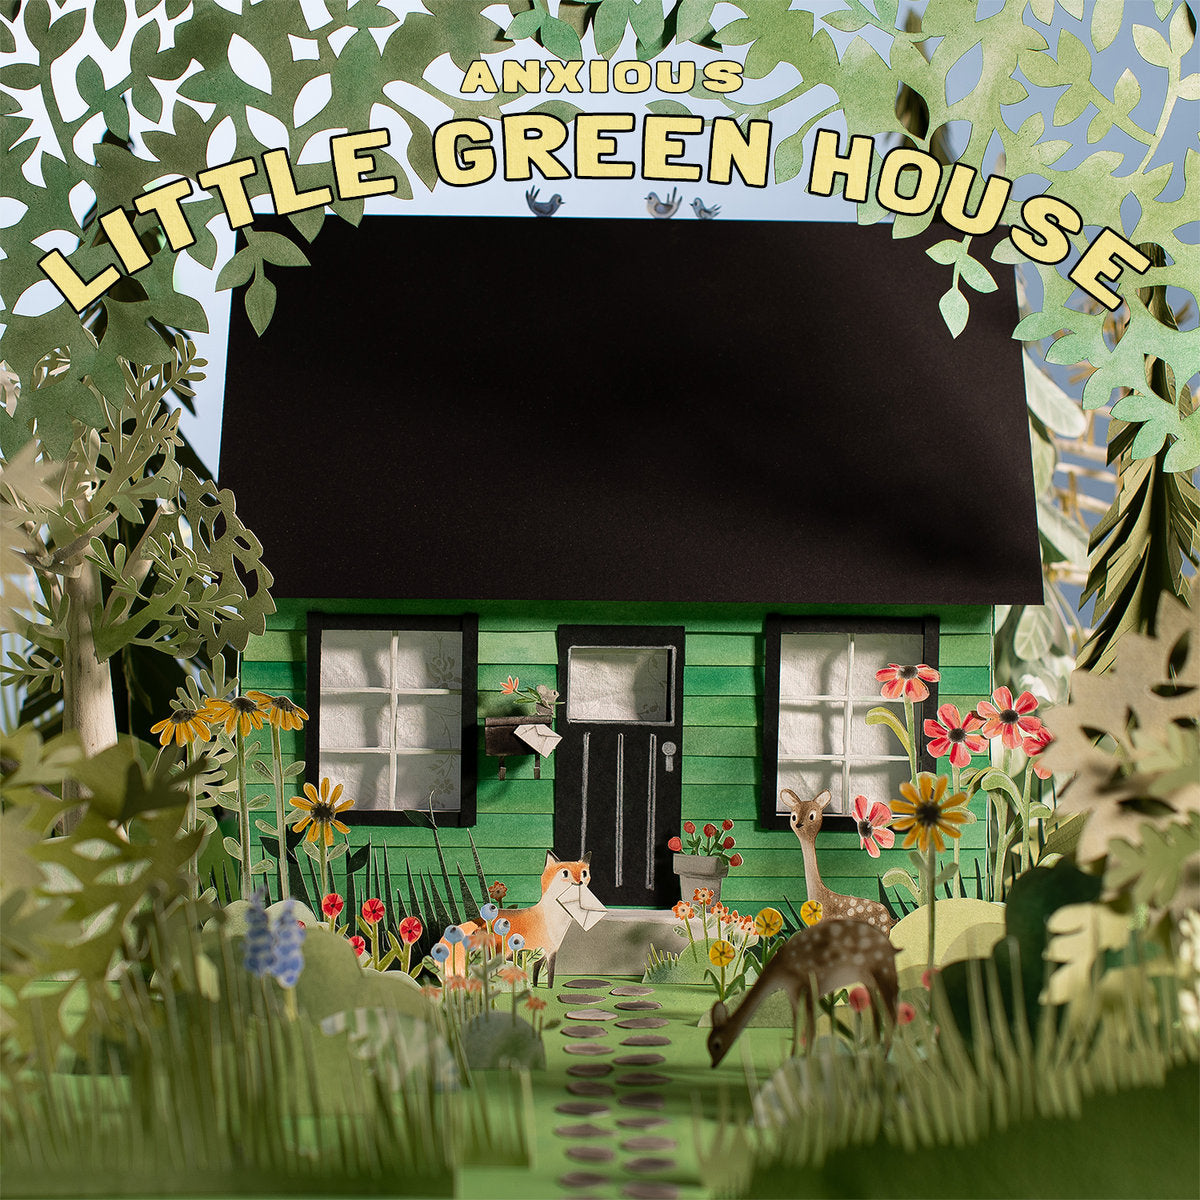 Anxious "Little Green House" 12" Vinyl